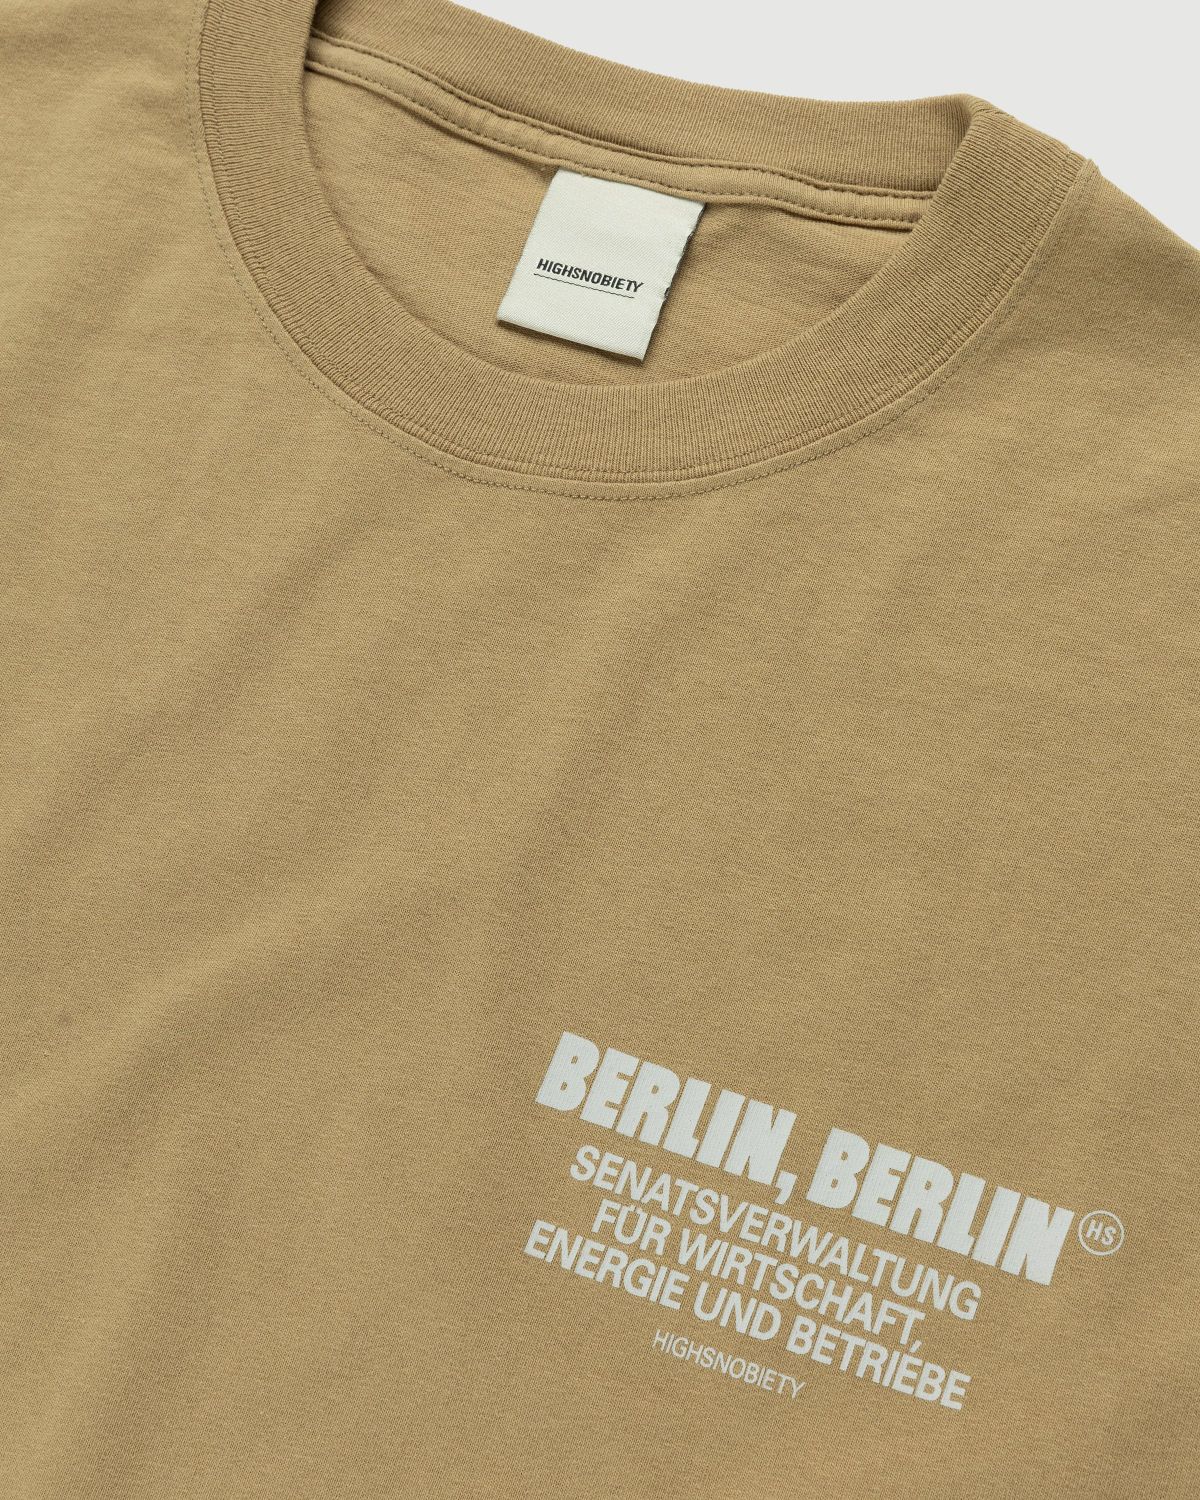 Highsnobiety – BERLIN, BERLIN 3 T-Shirt Military Green - Tops - Beige - Image 4